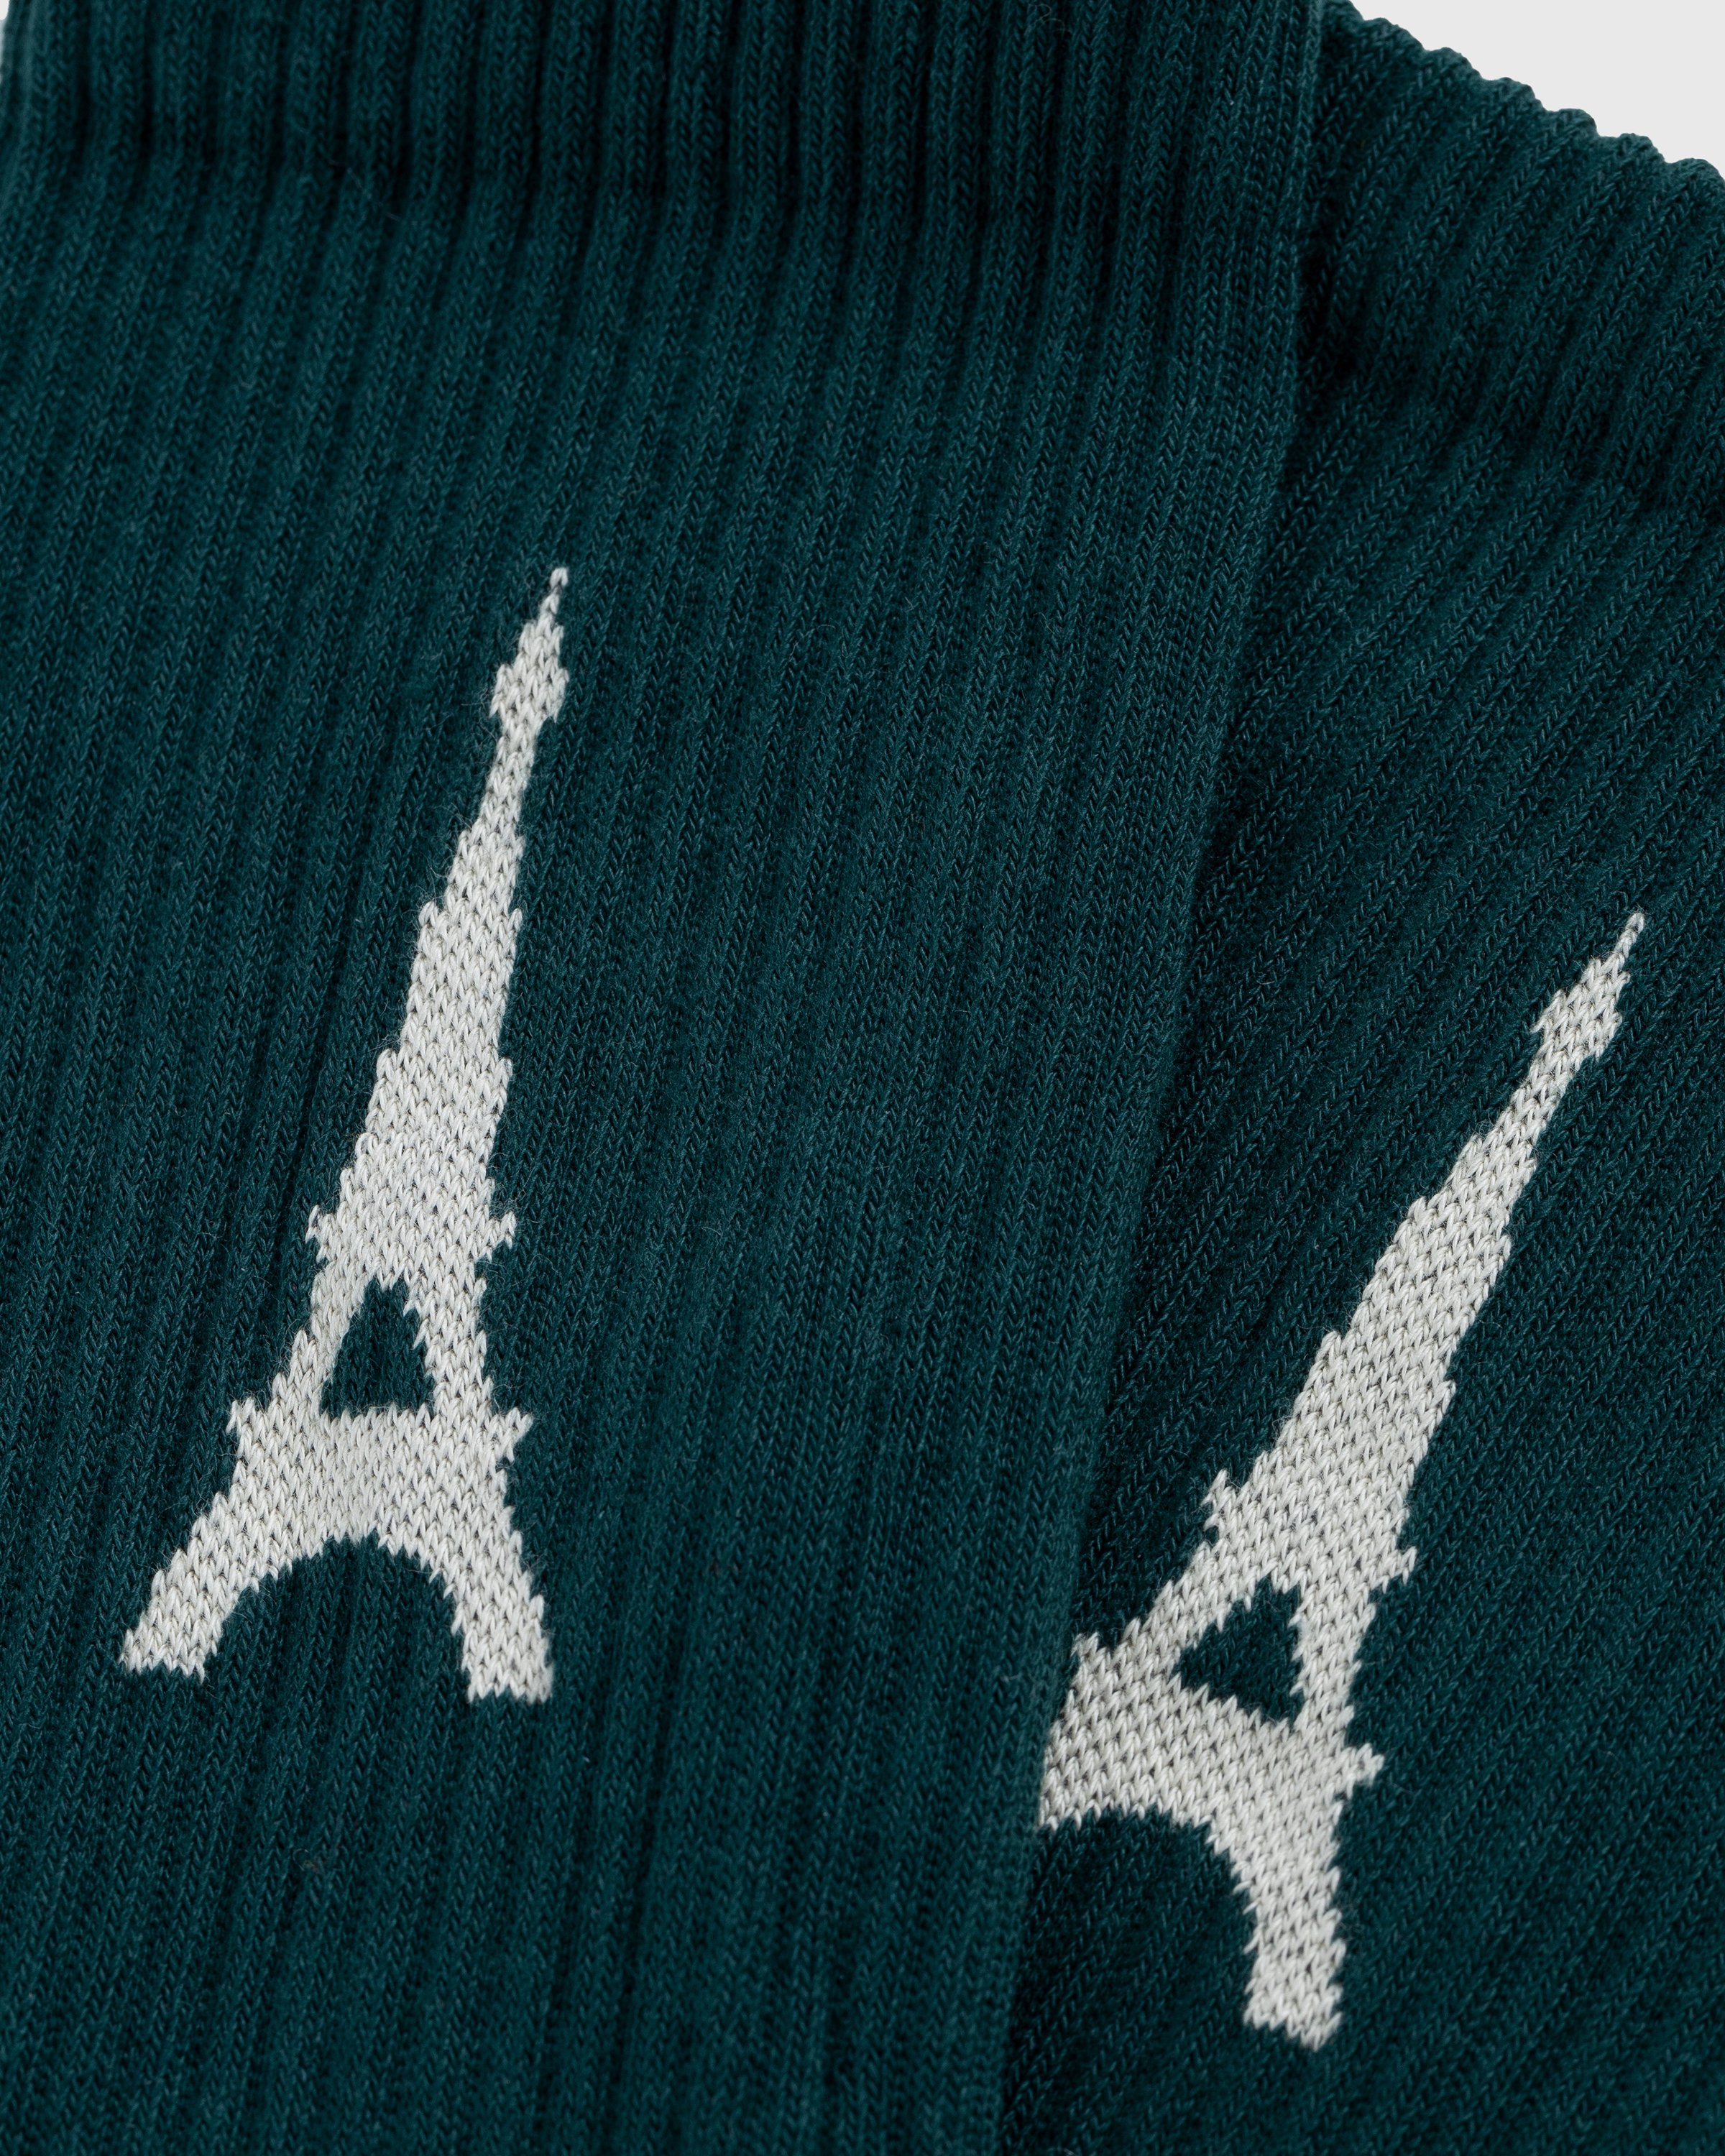 Highsnobiety - Not in Paris 5 Paris Socks Green - Accessories - Green - Image 3